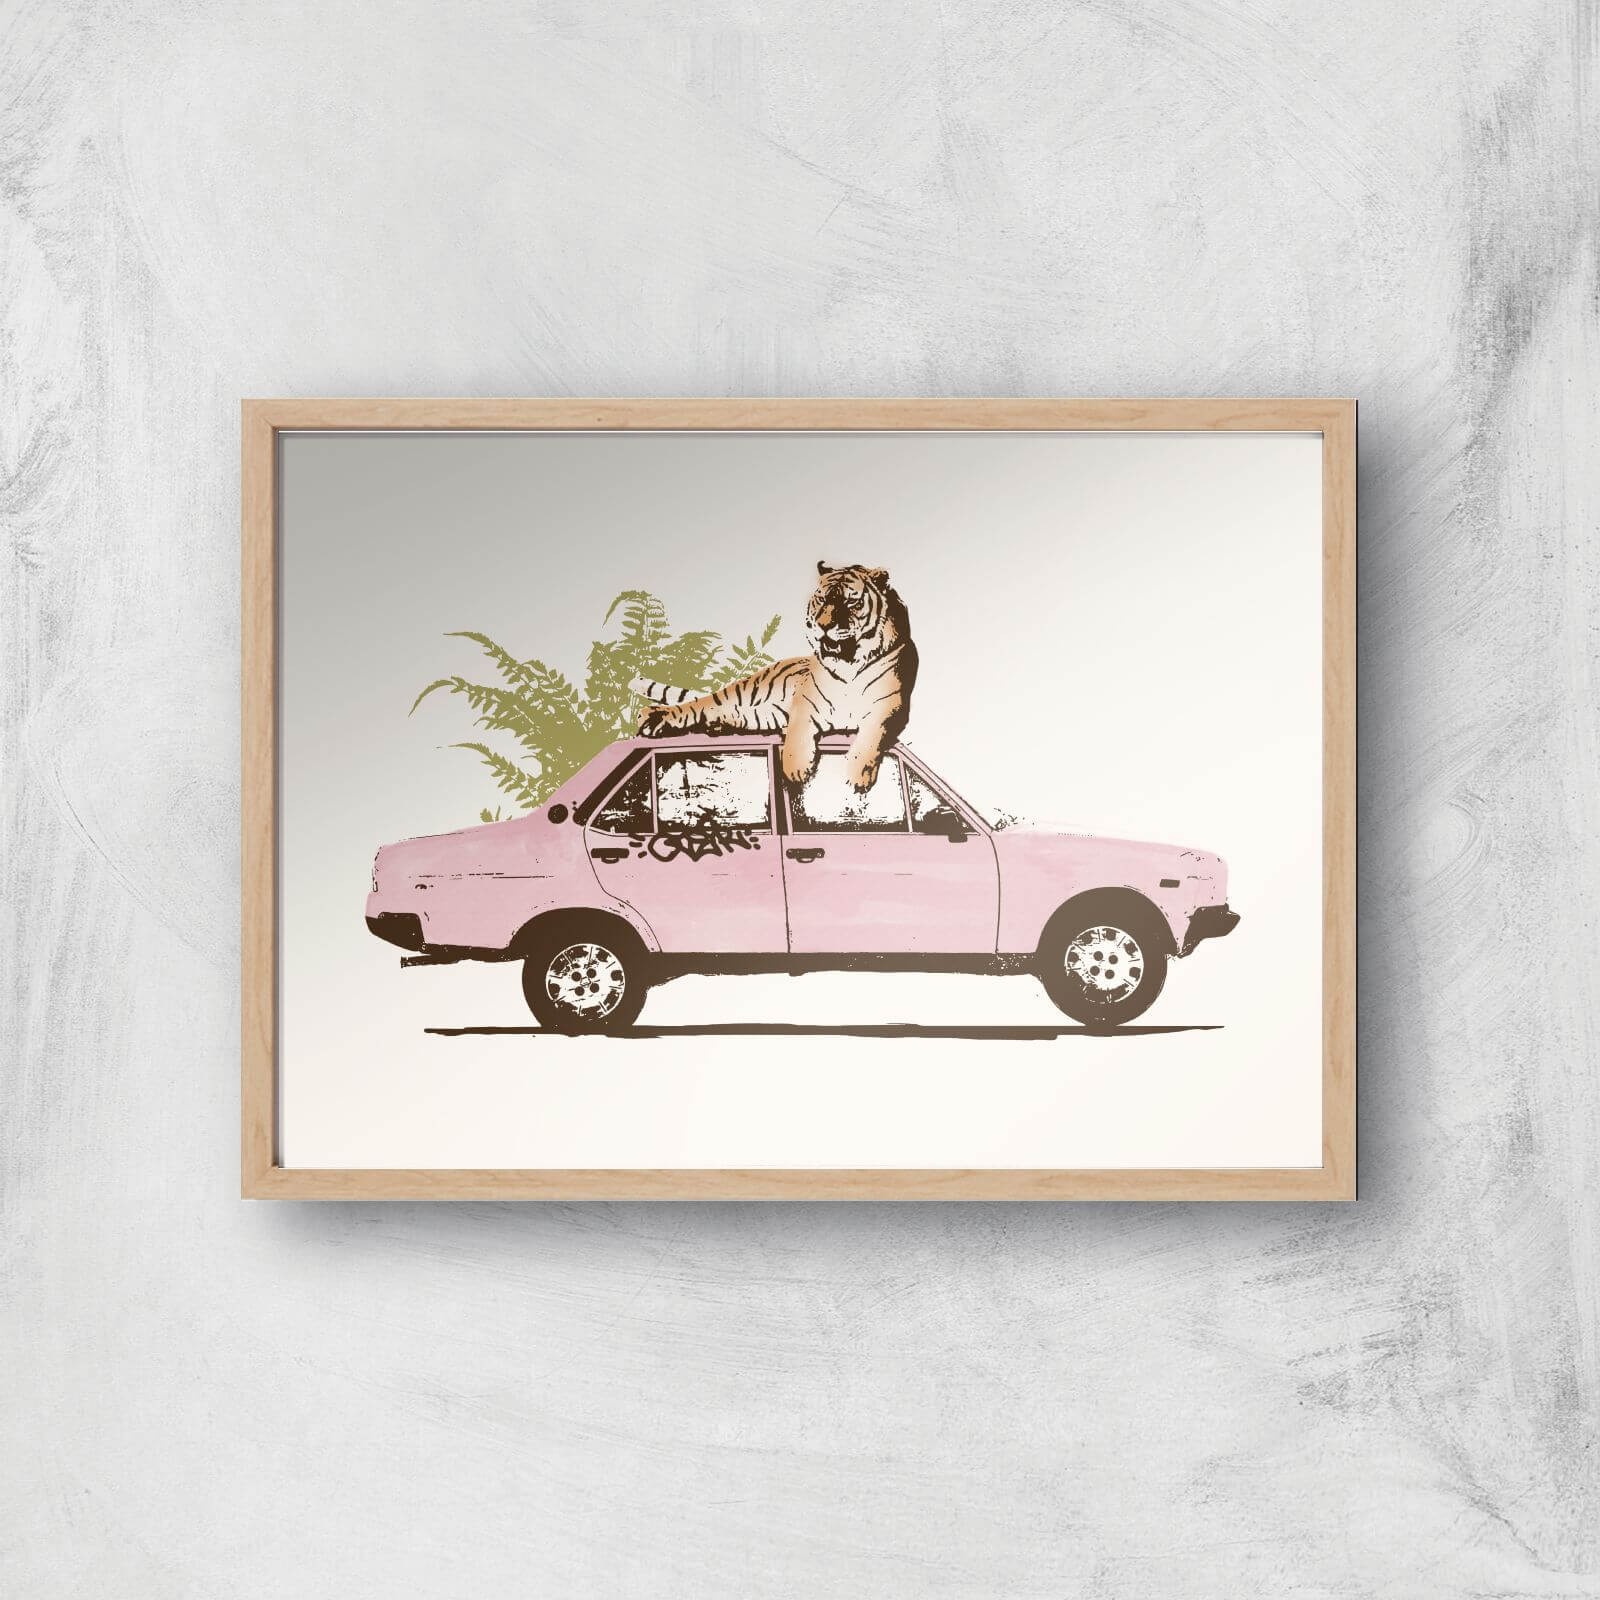 Tiger On Car Giclee Art Print - A2 - Wooden Frame